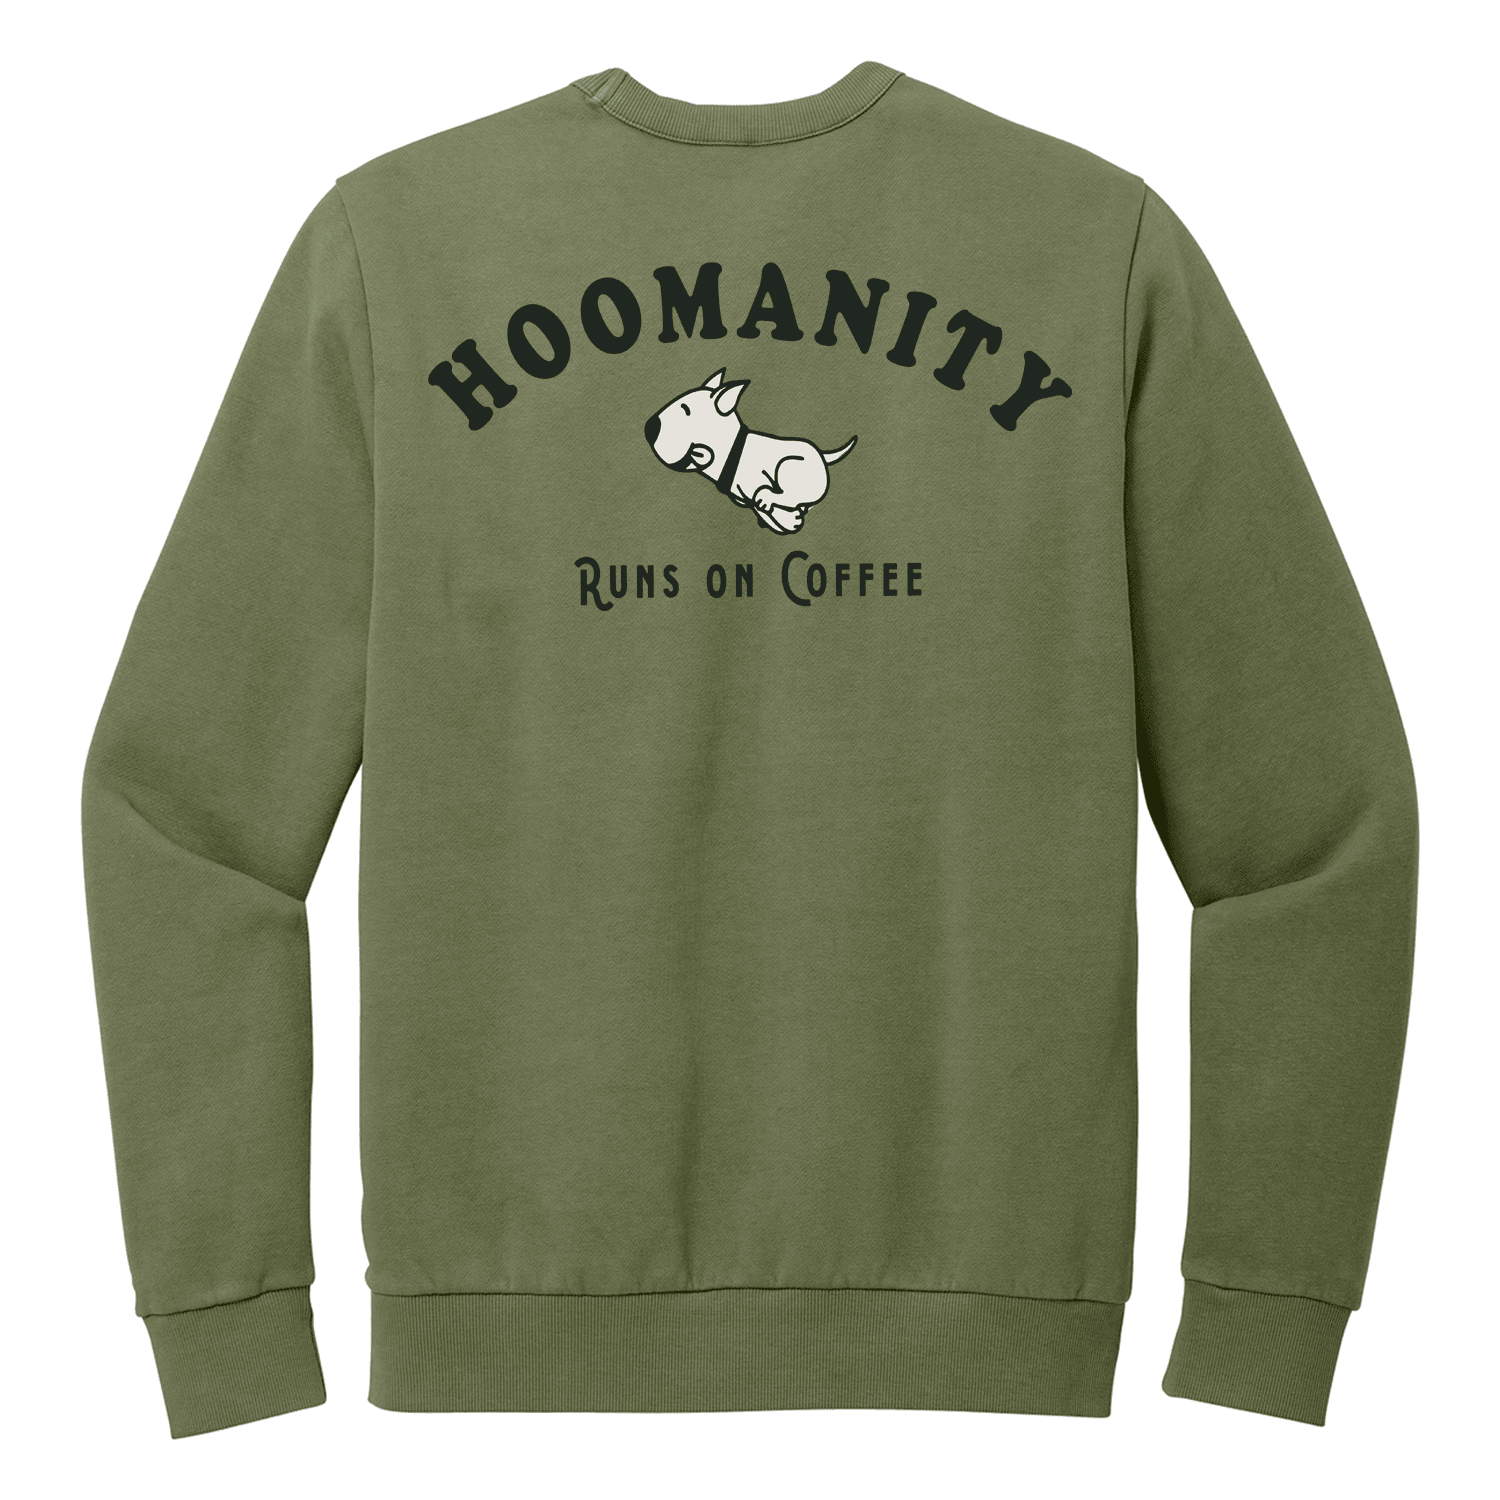 Hoomanity Runs on Coffee Sweatshirt - Ales to Trails